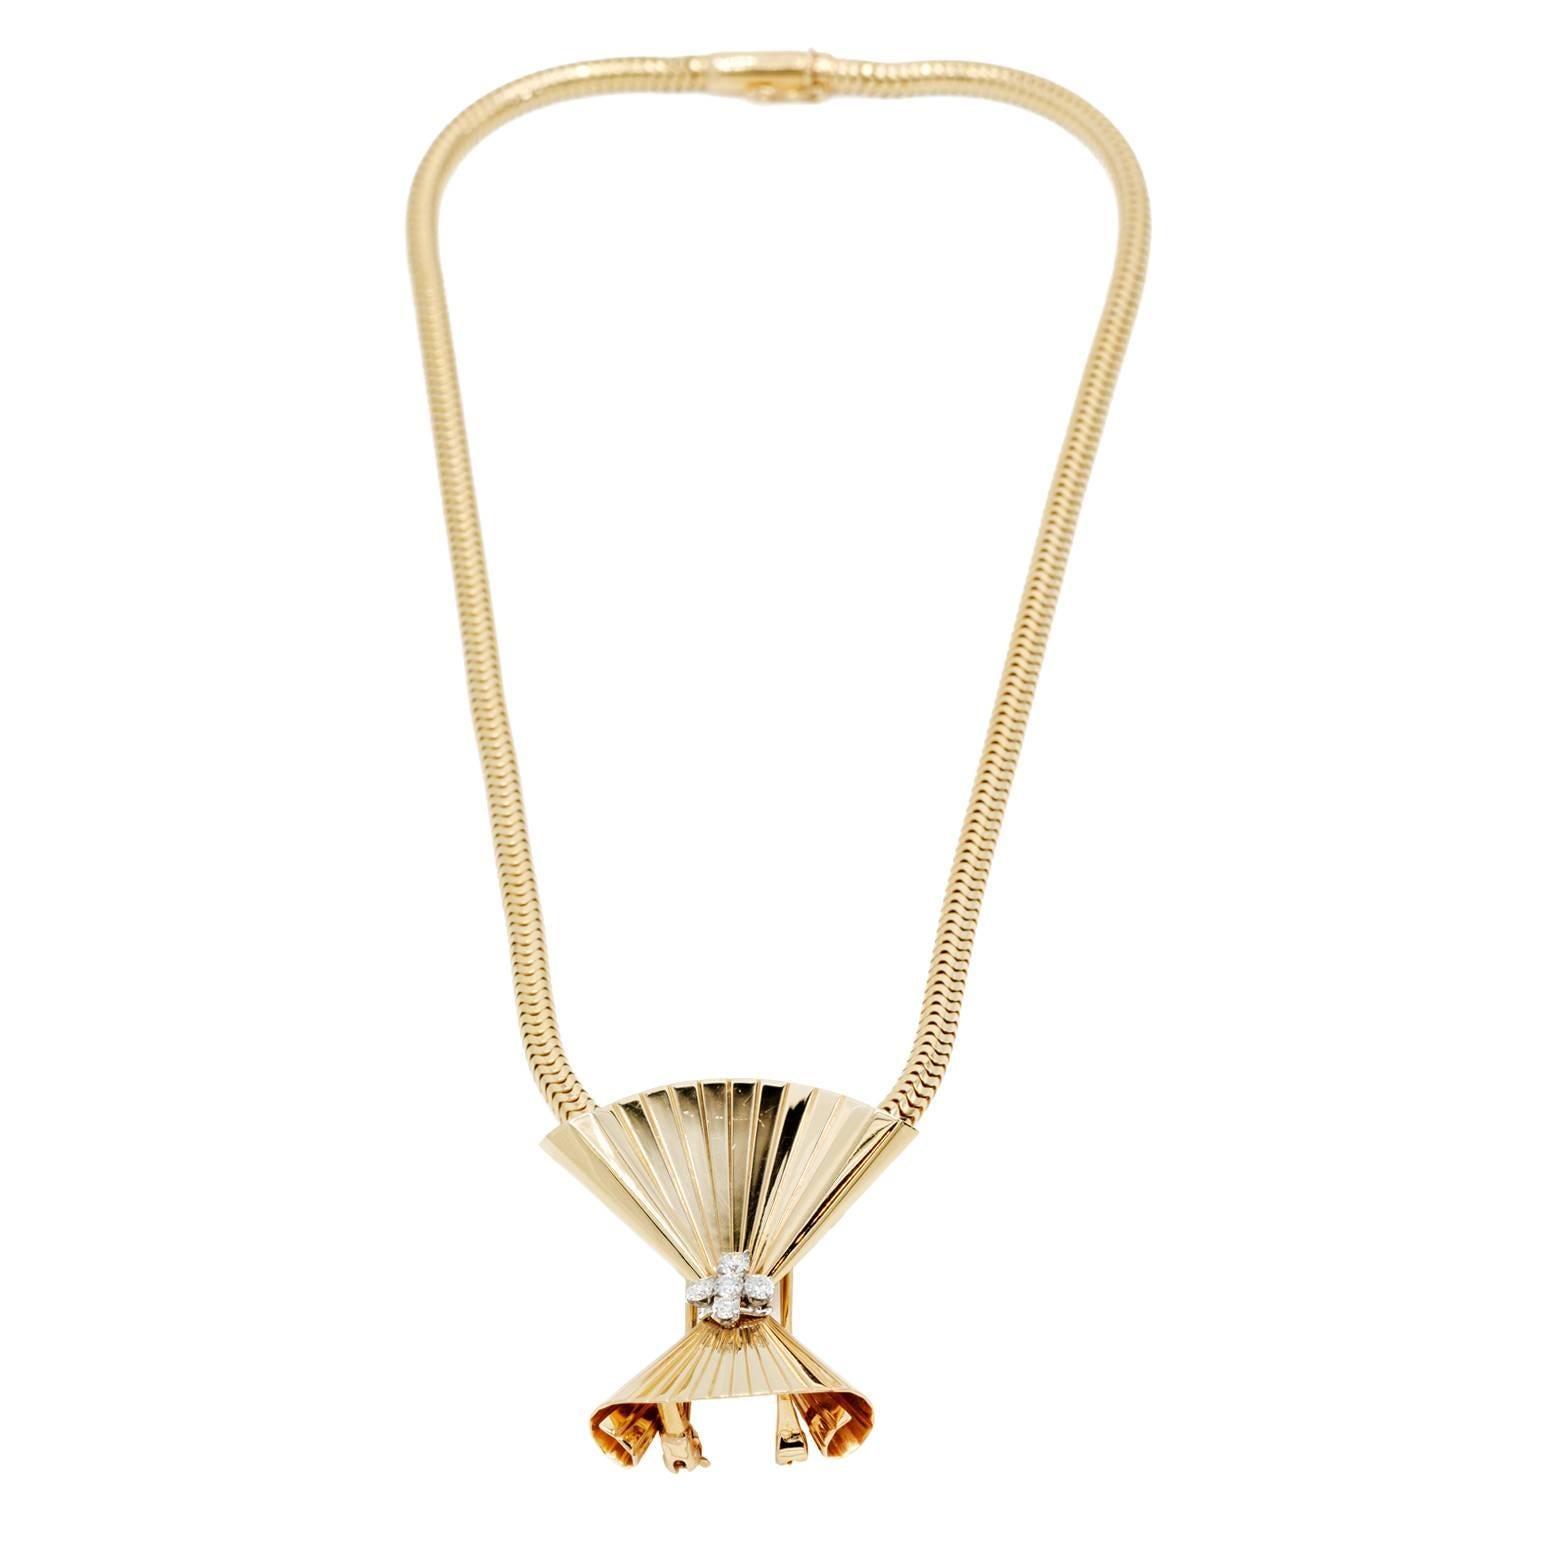 Tiffany & Co. Diamond Brooch on Snake Chain Necklace